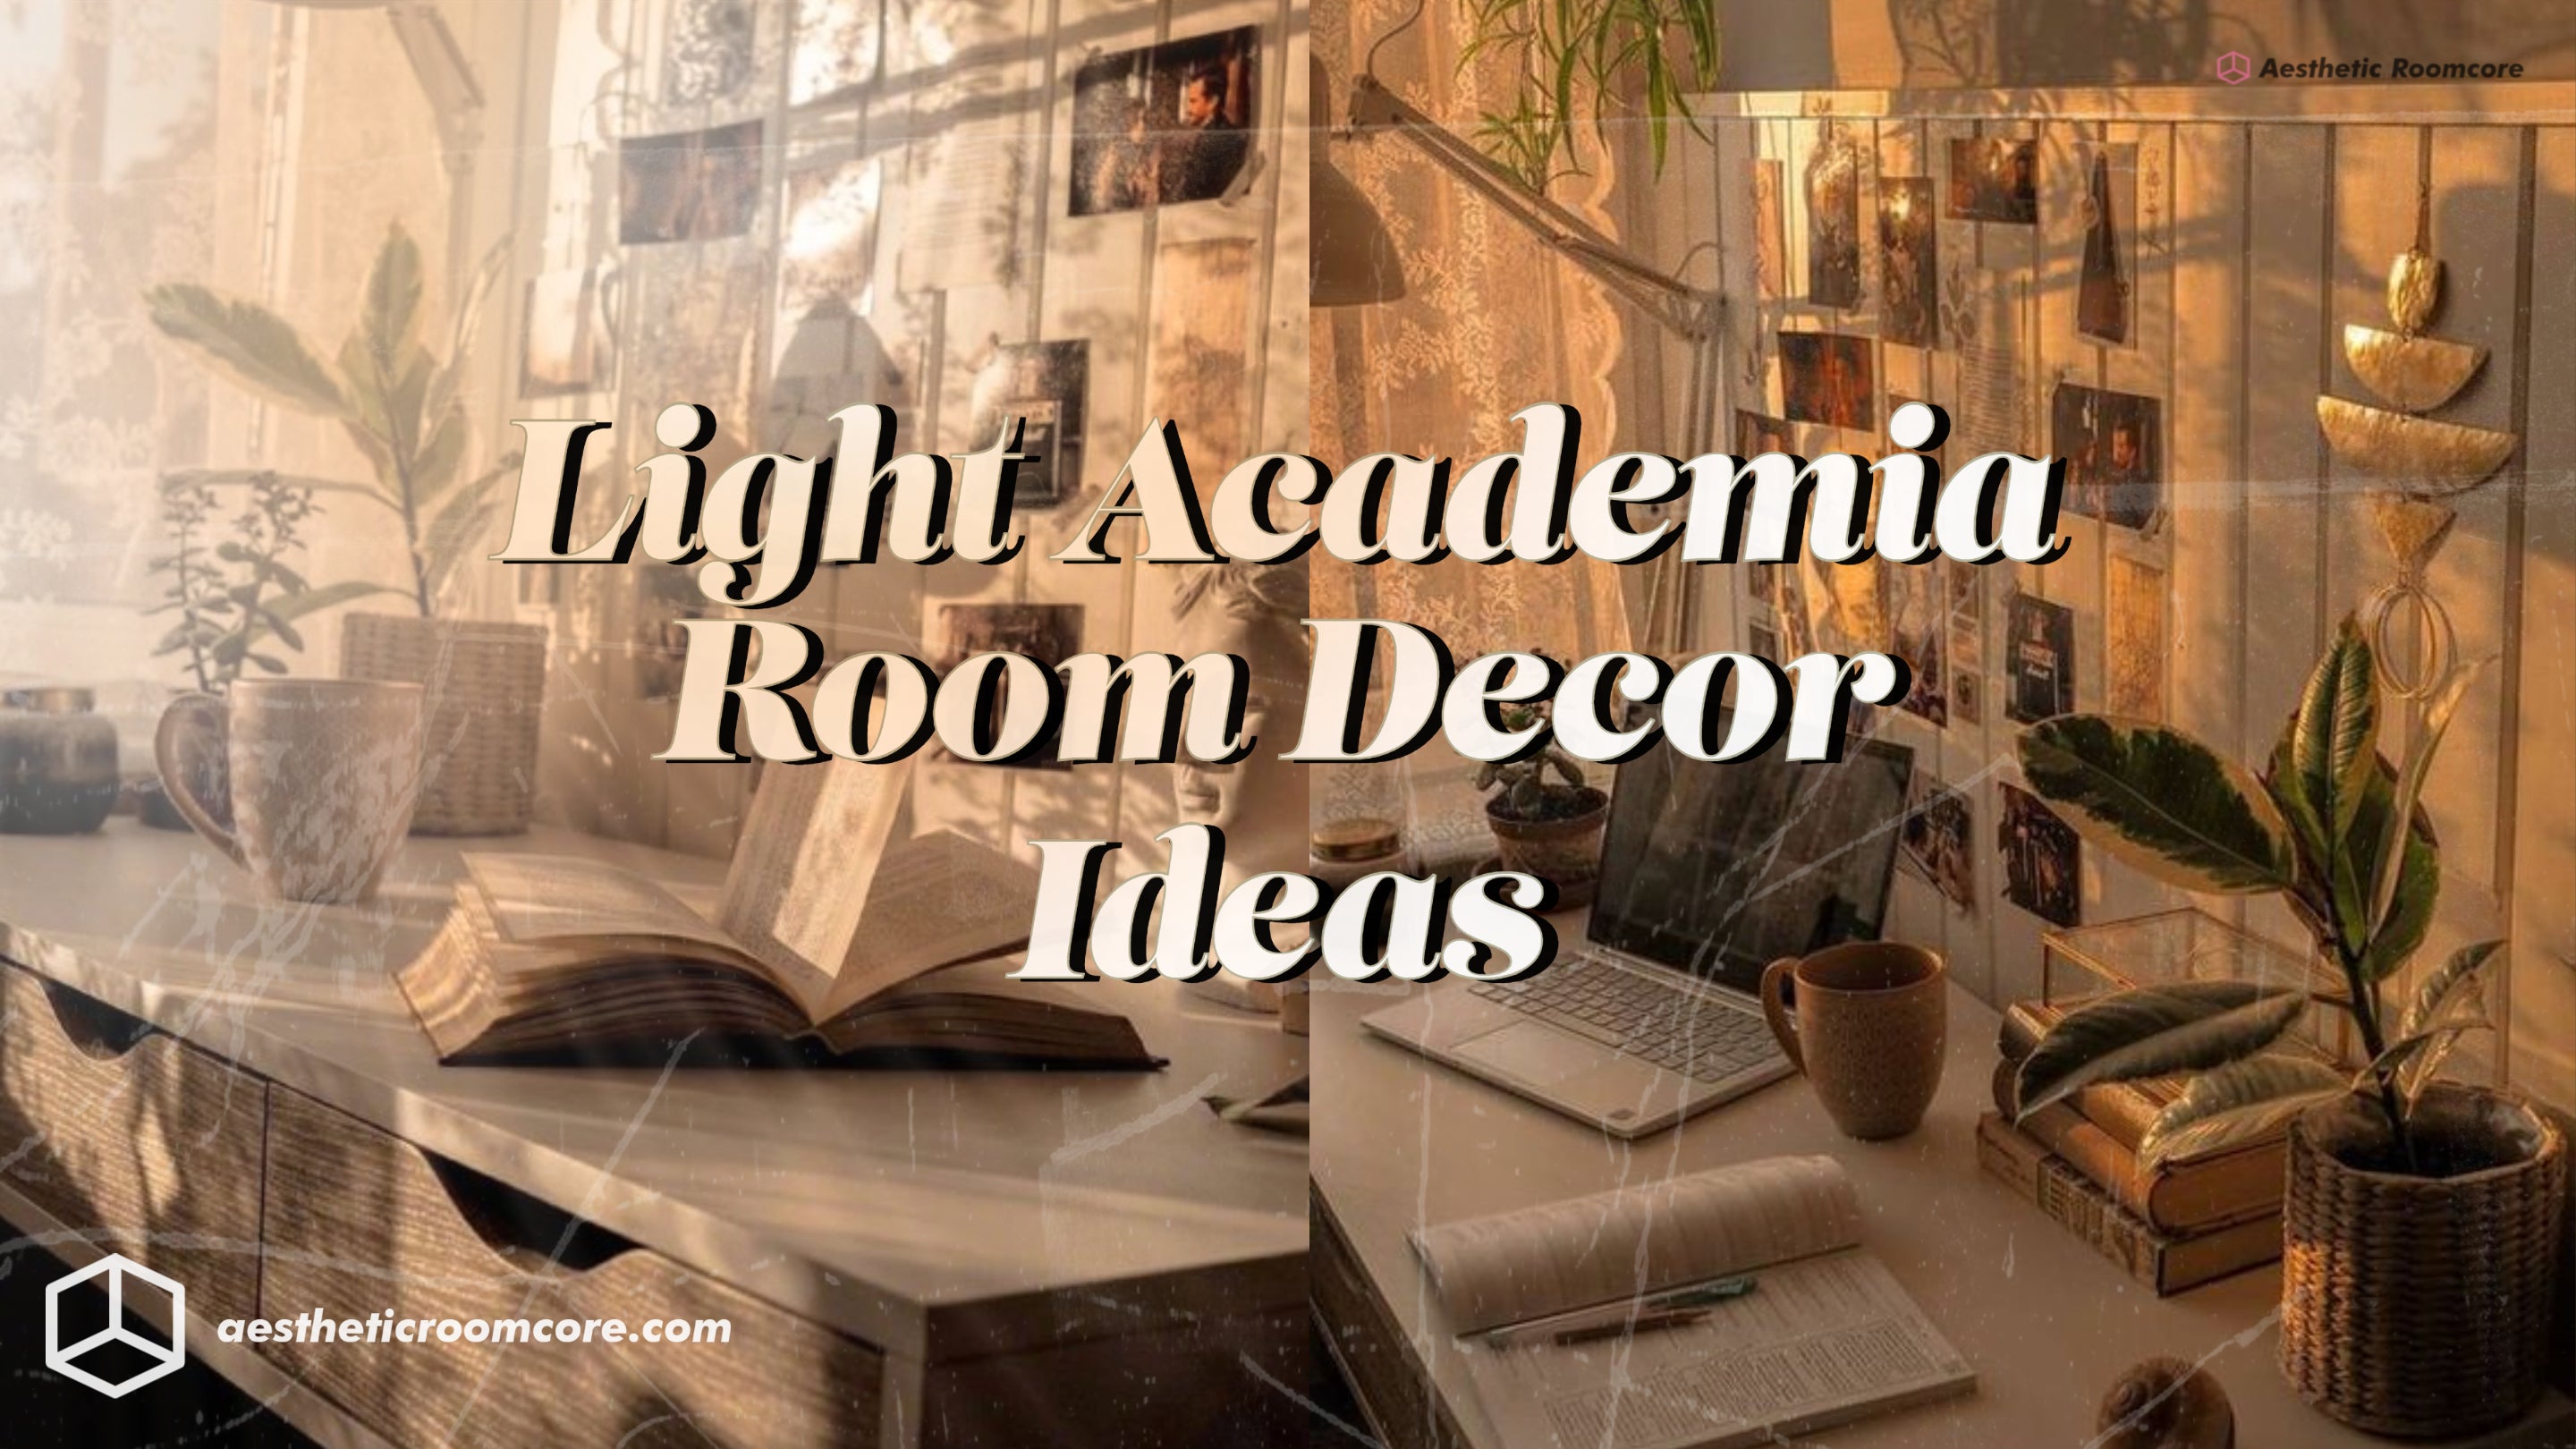 light academia bedroom